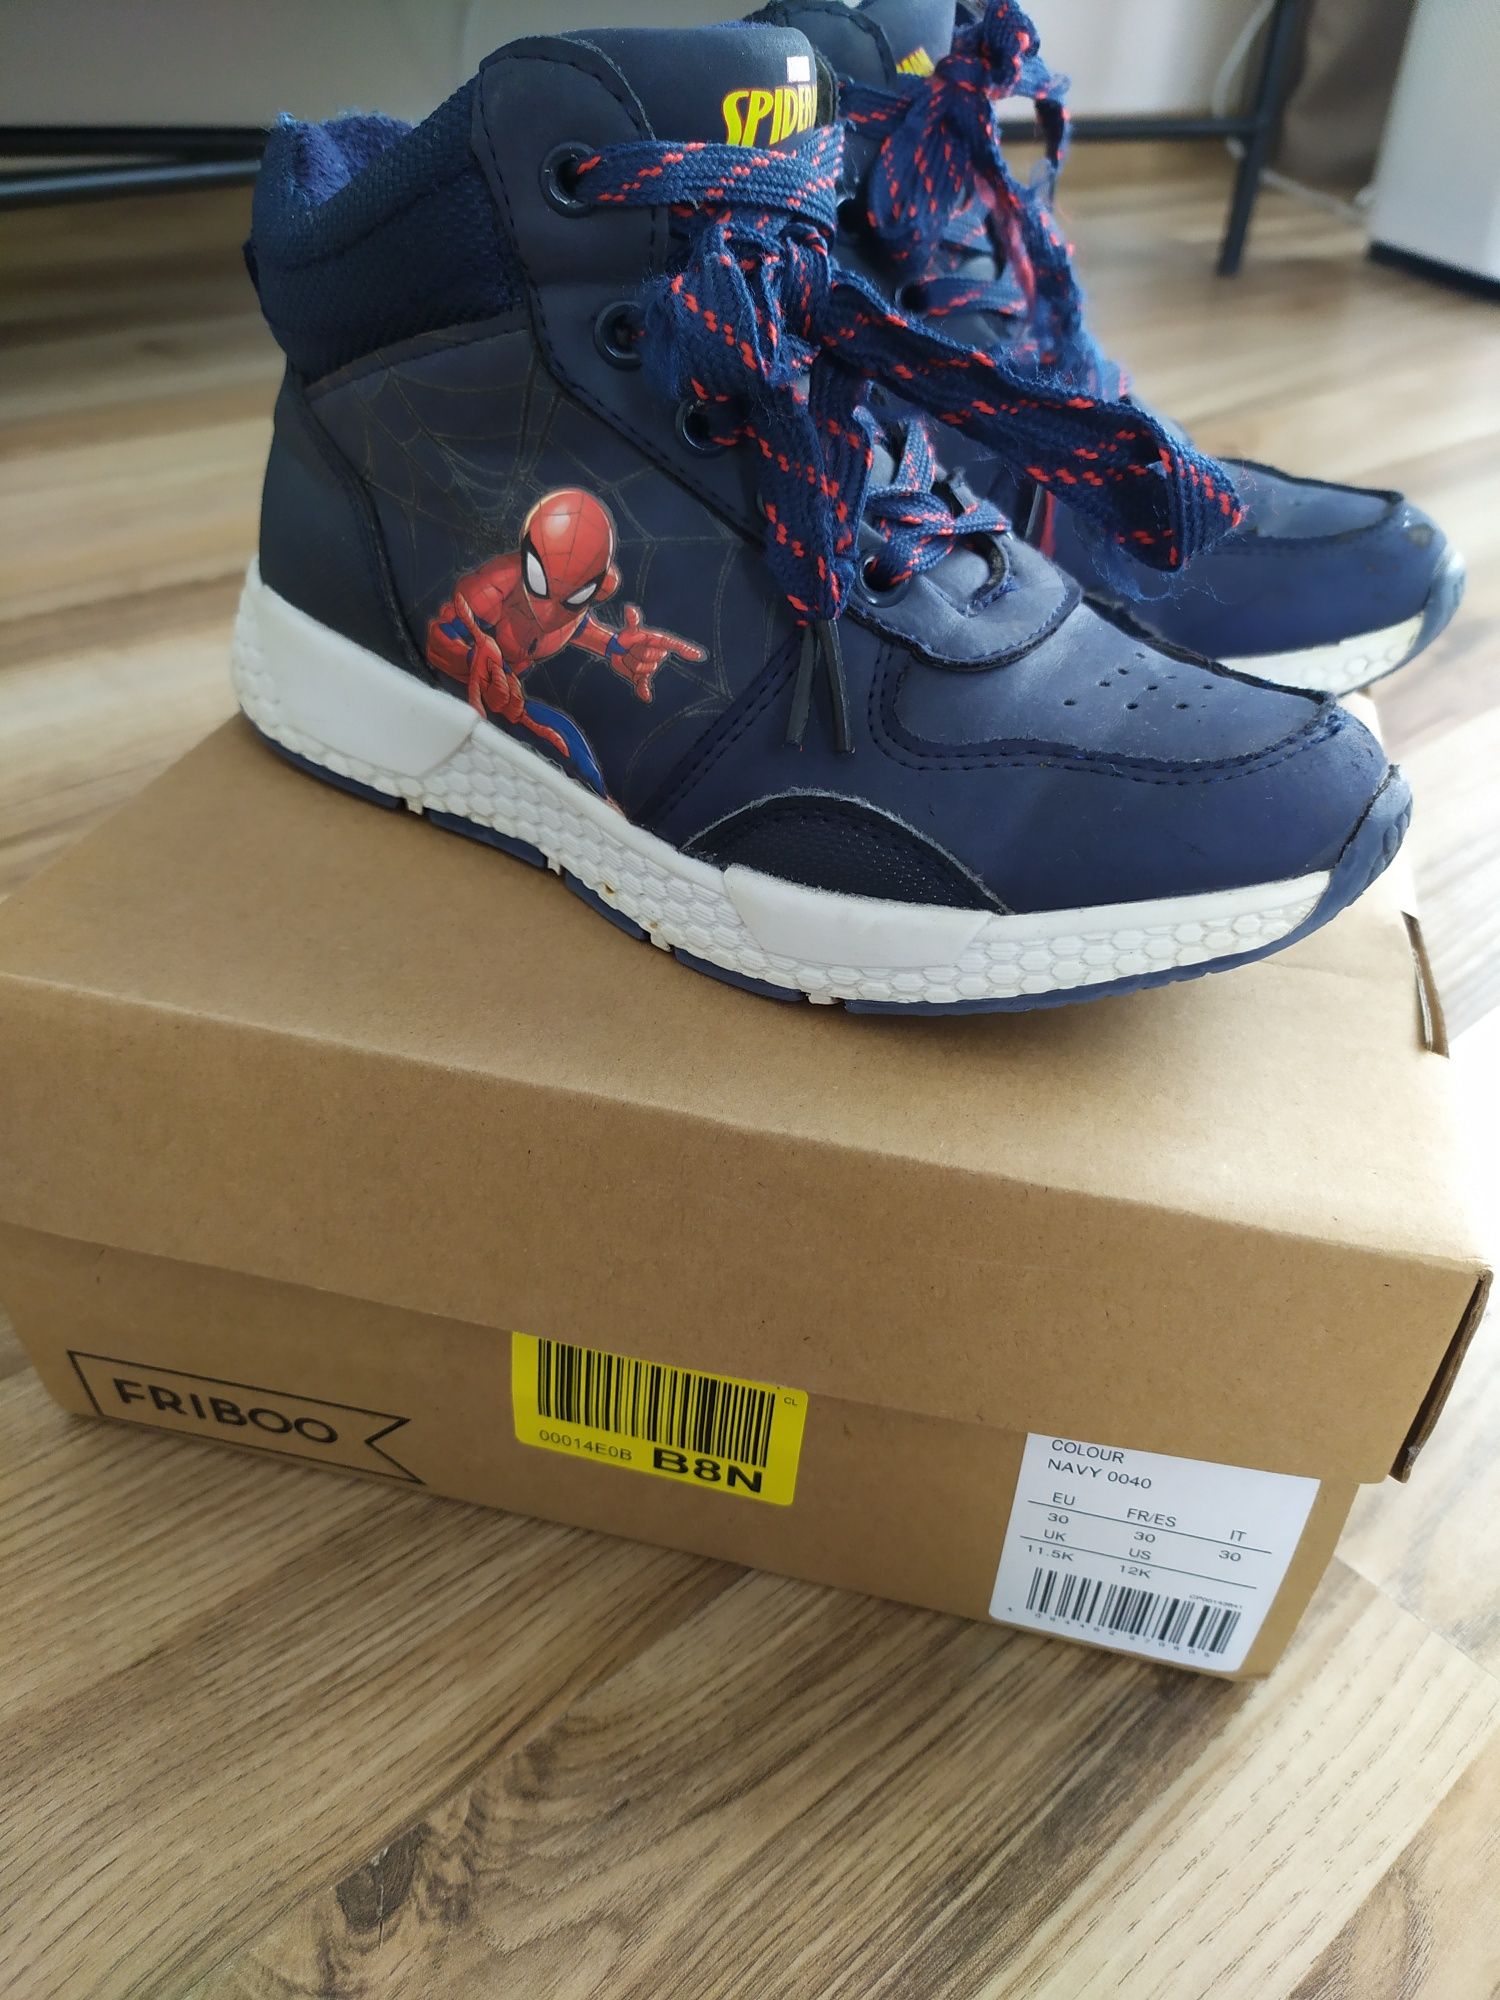 Marvel Spider-Man buty jesienne sneakersy Friboo r.30